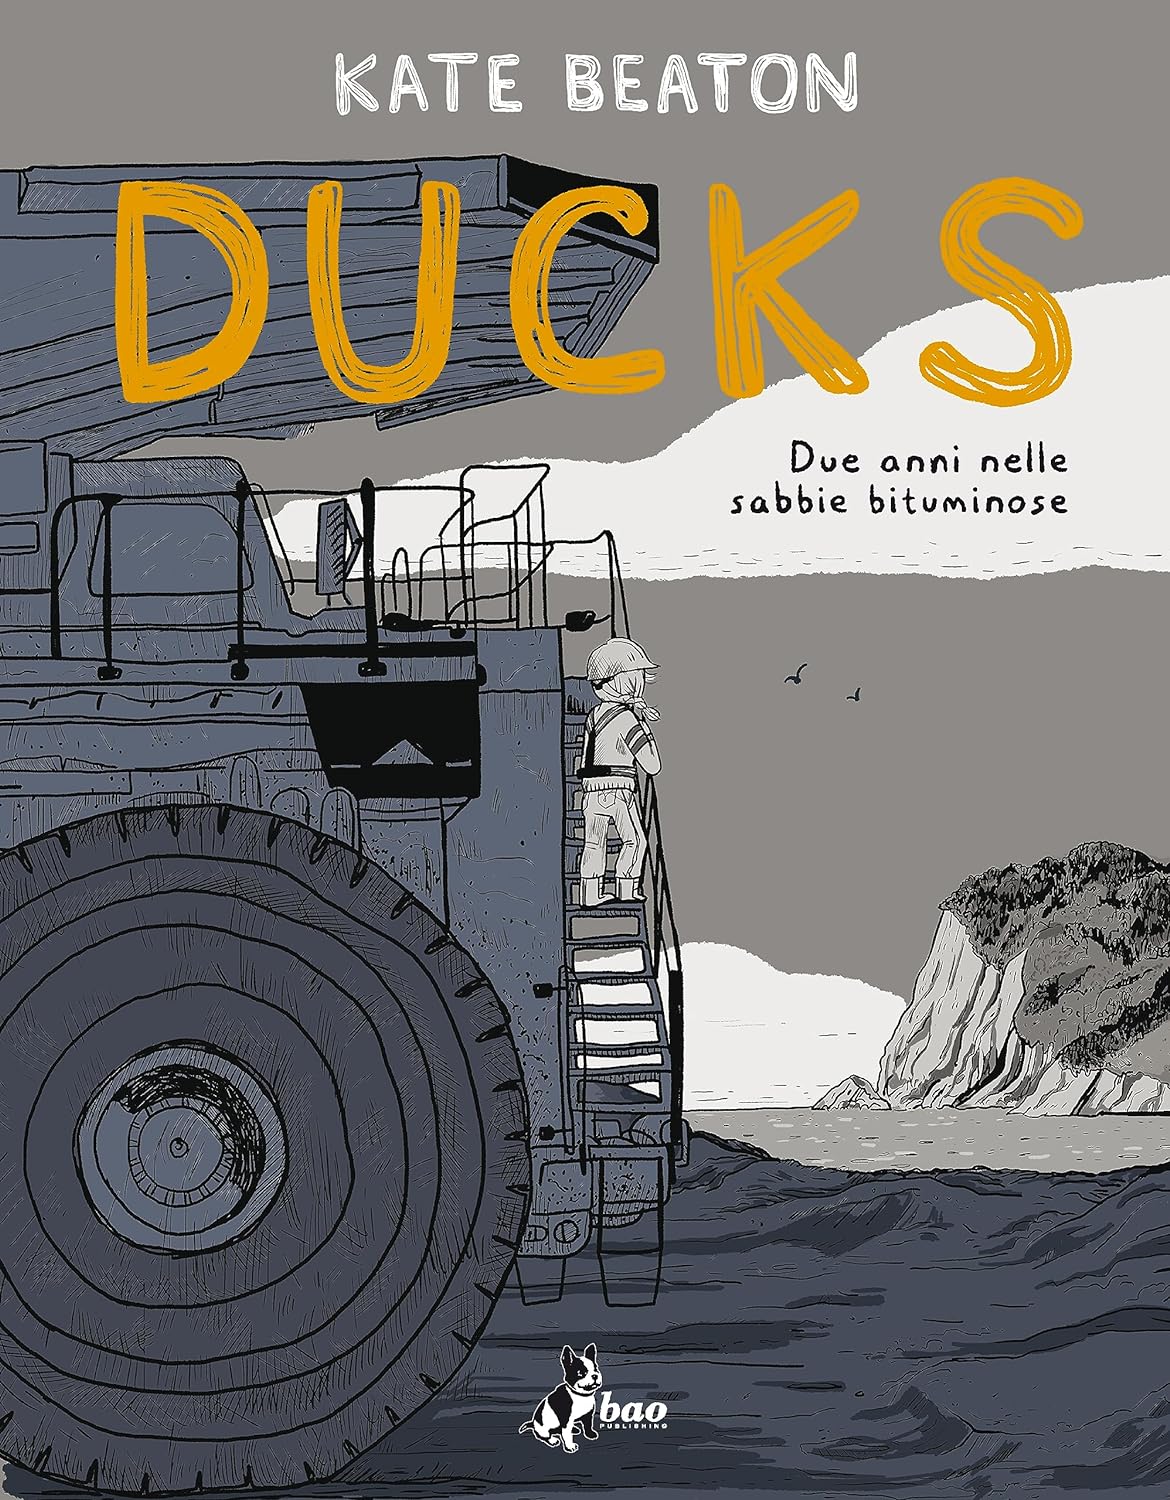 Kate Beaton: Ducks (GraphicNovel, Italiano language, Bao publishing)